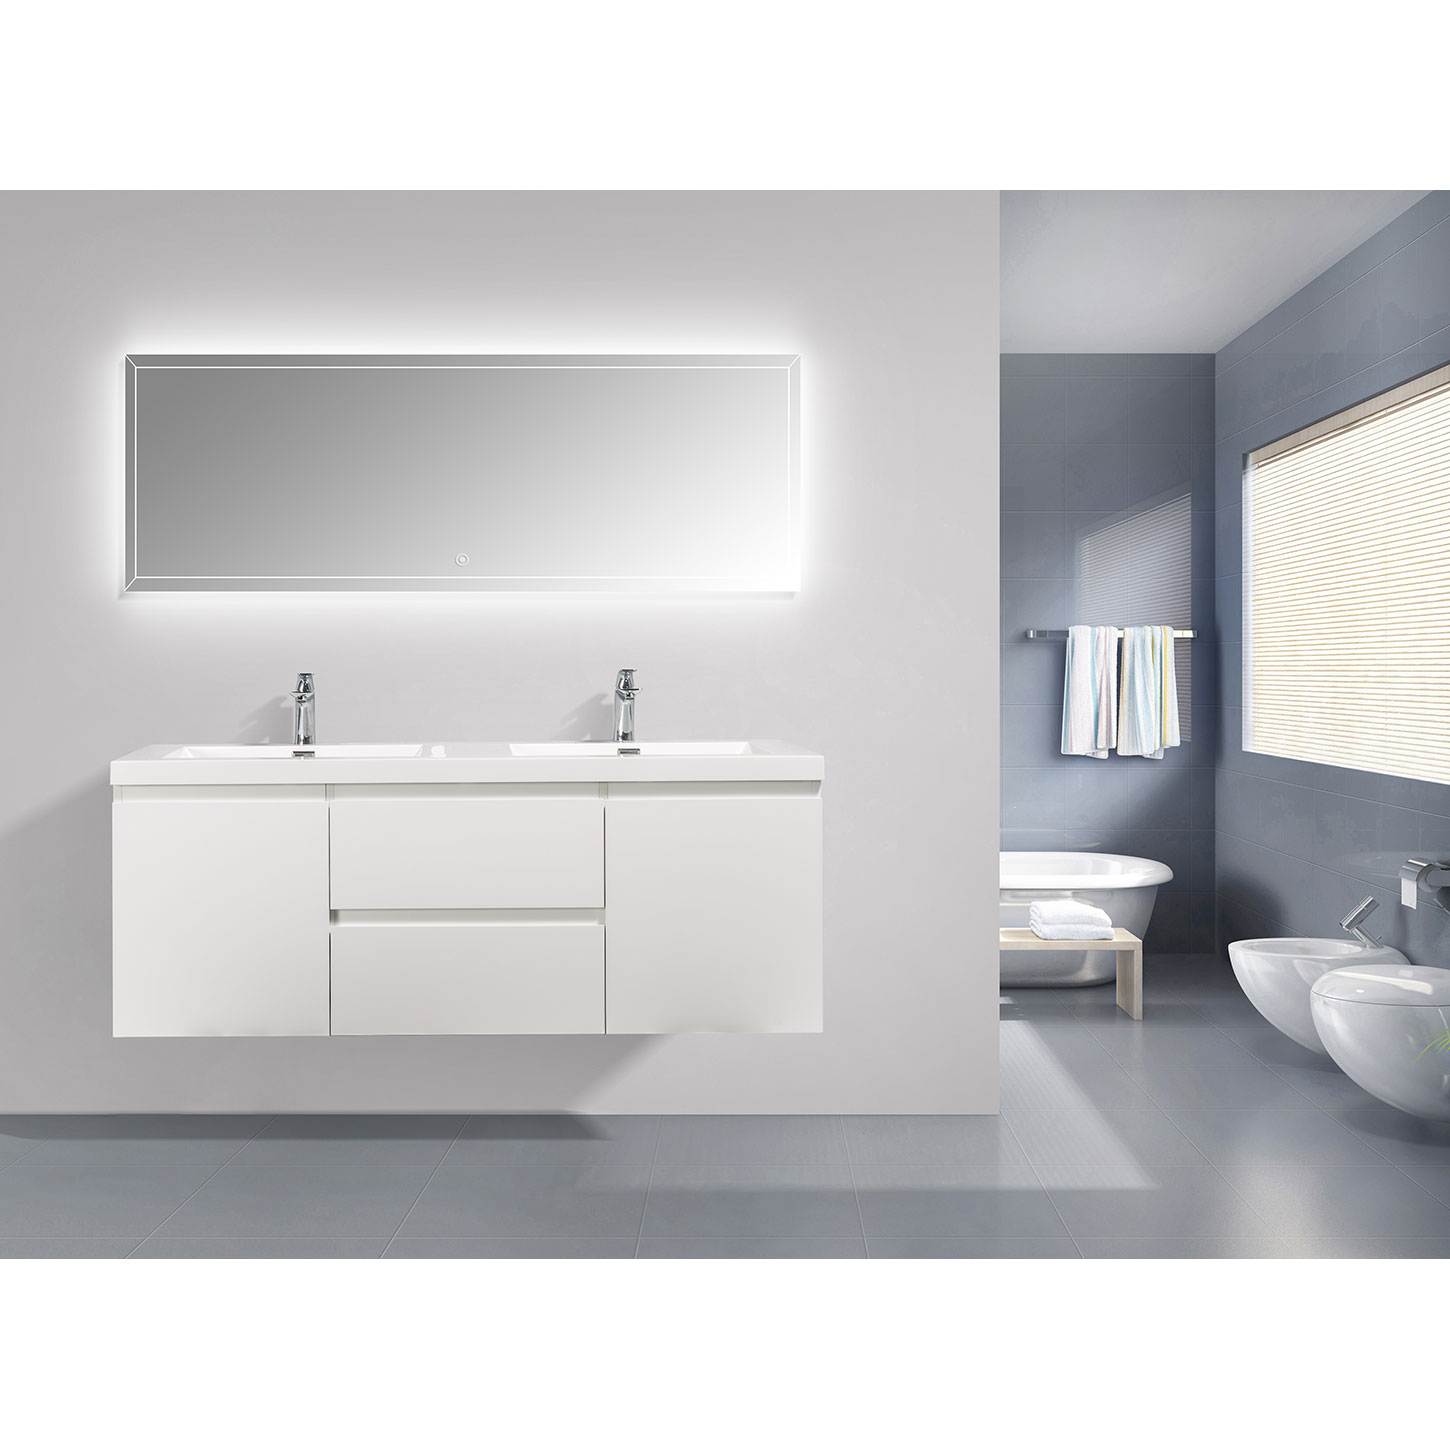 Bathroom Counter Organizer , Bathroom Organizer Countertop ,Counter Standing Rack, Size: Style1, White